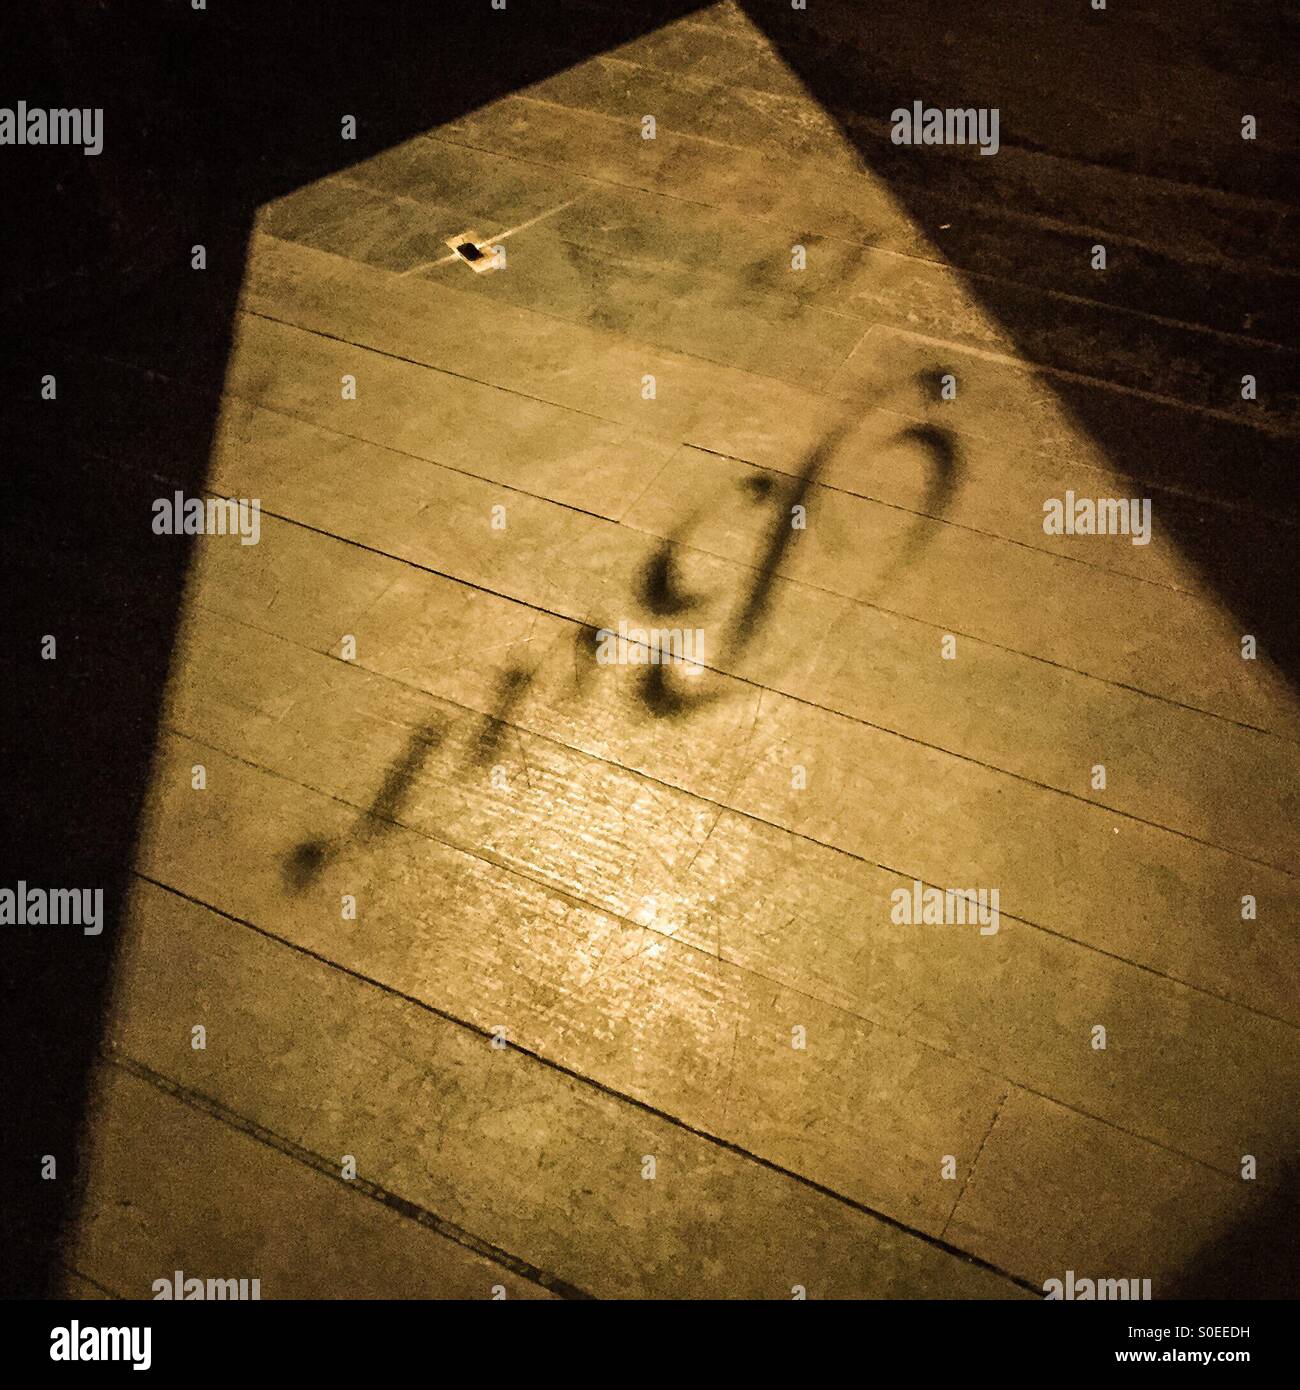 A shadow on the floor of a bar Stock Photo